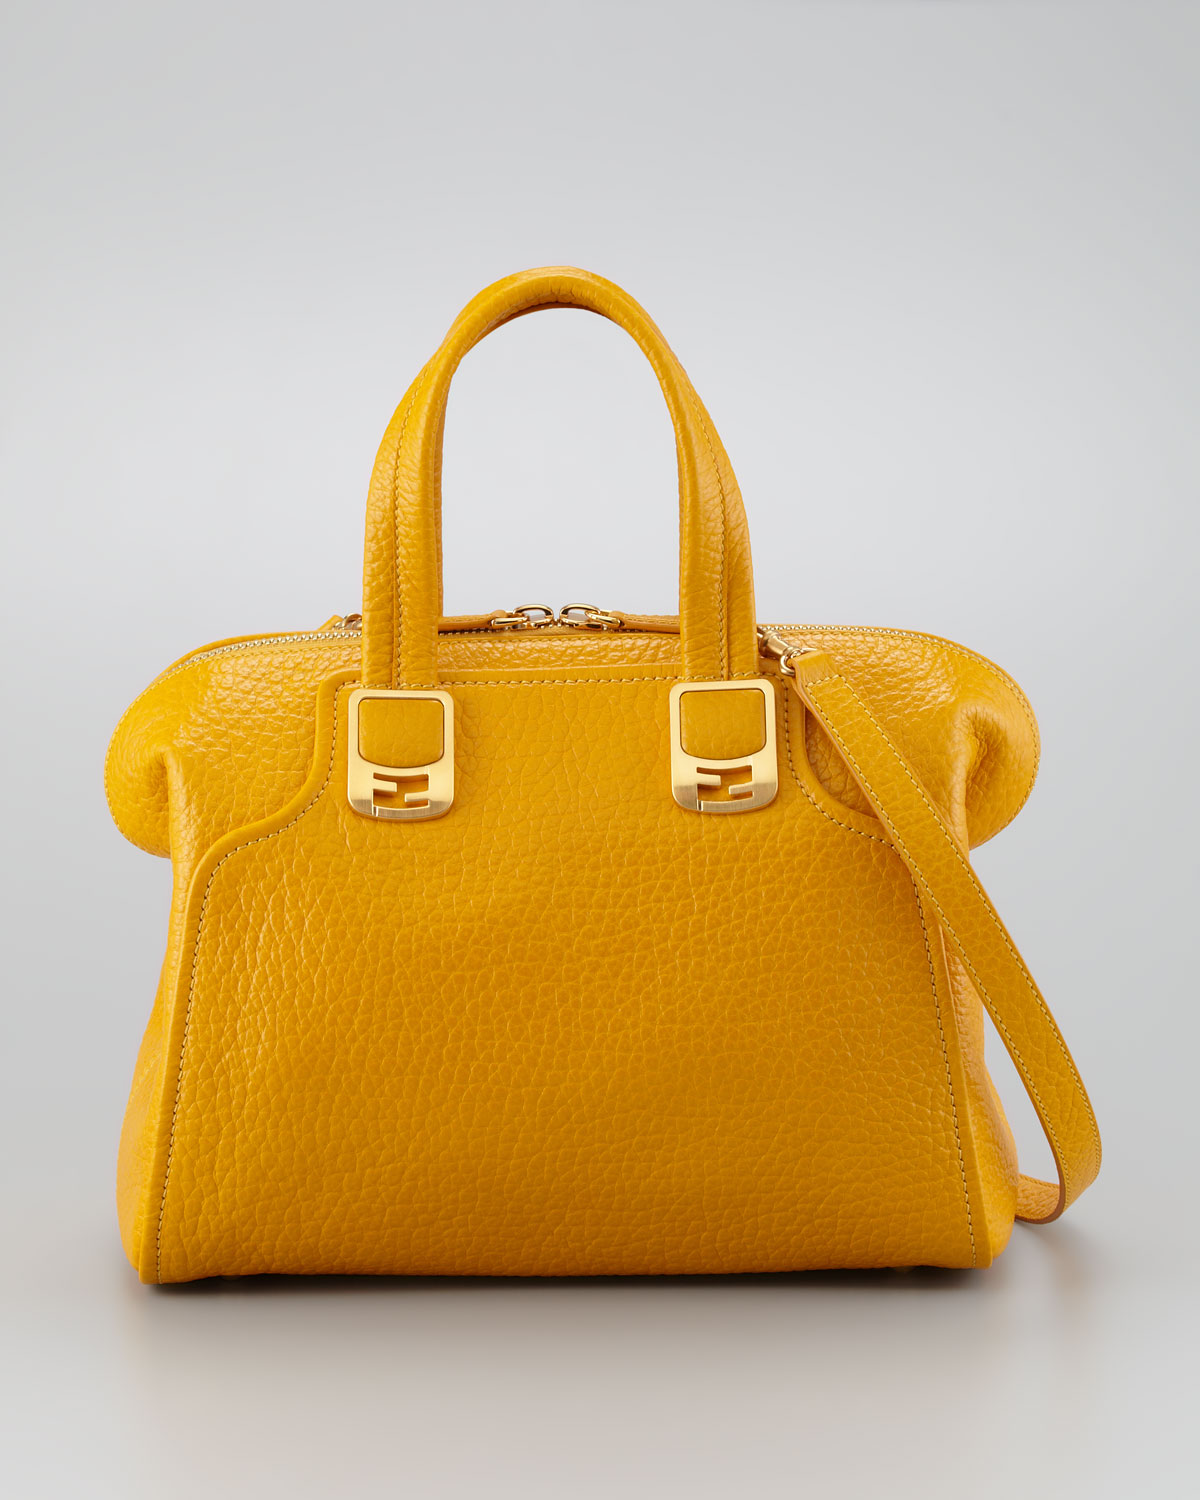 Lyst - Fendi Chameleon Small Pebbled Bag in Yellow